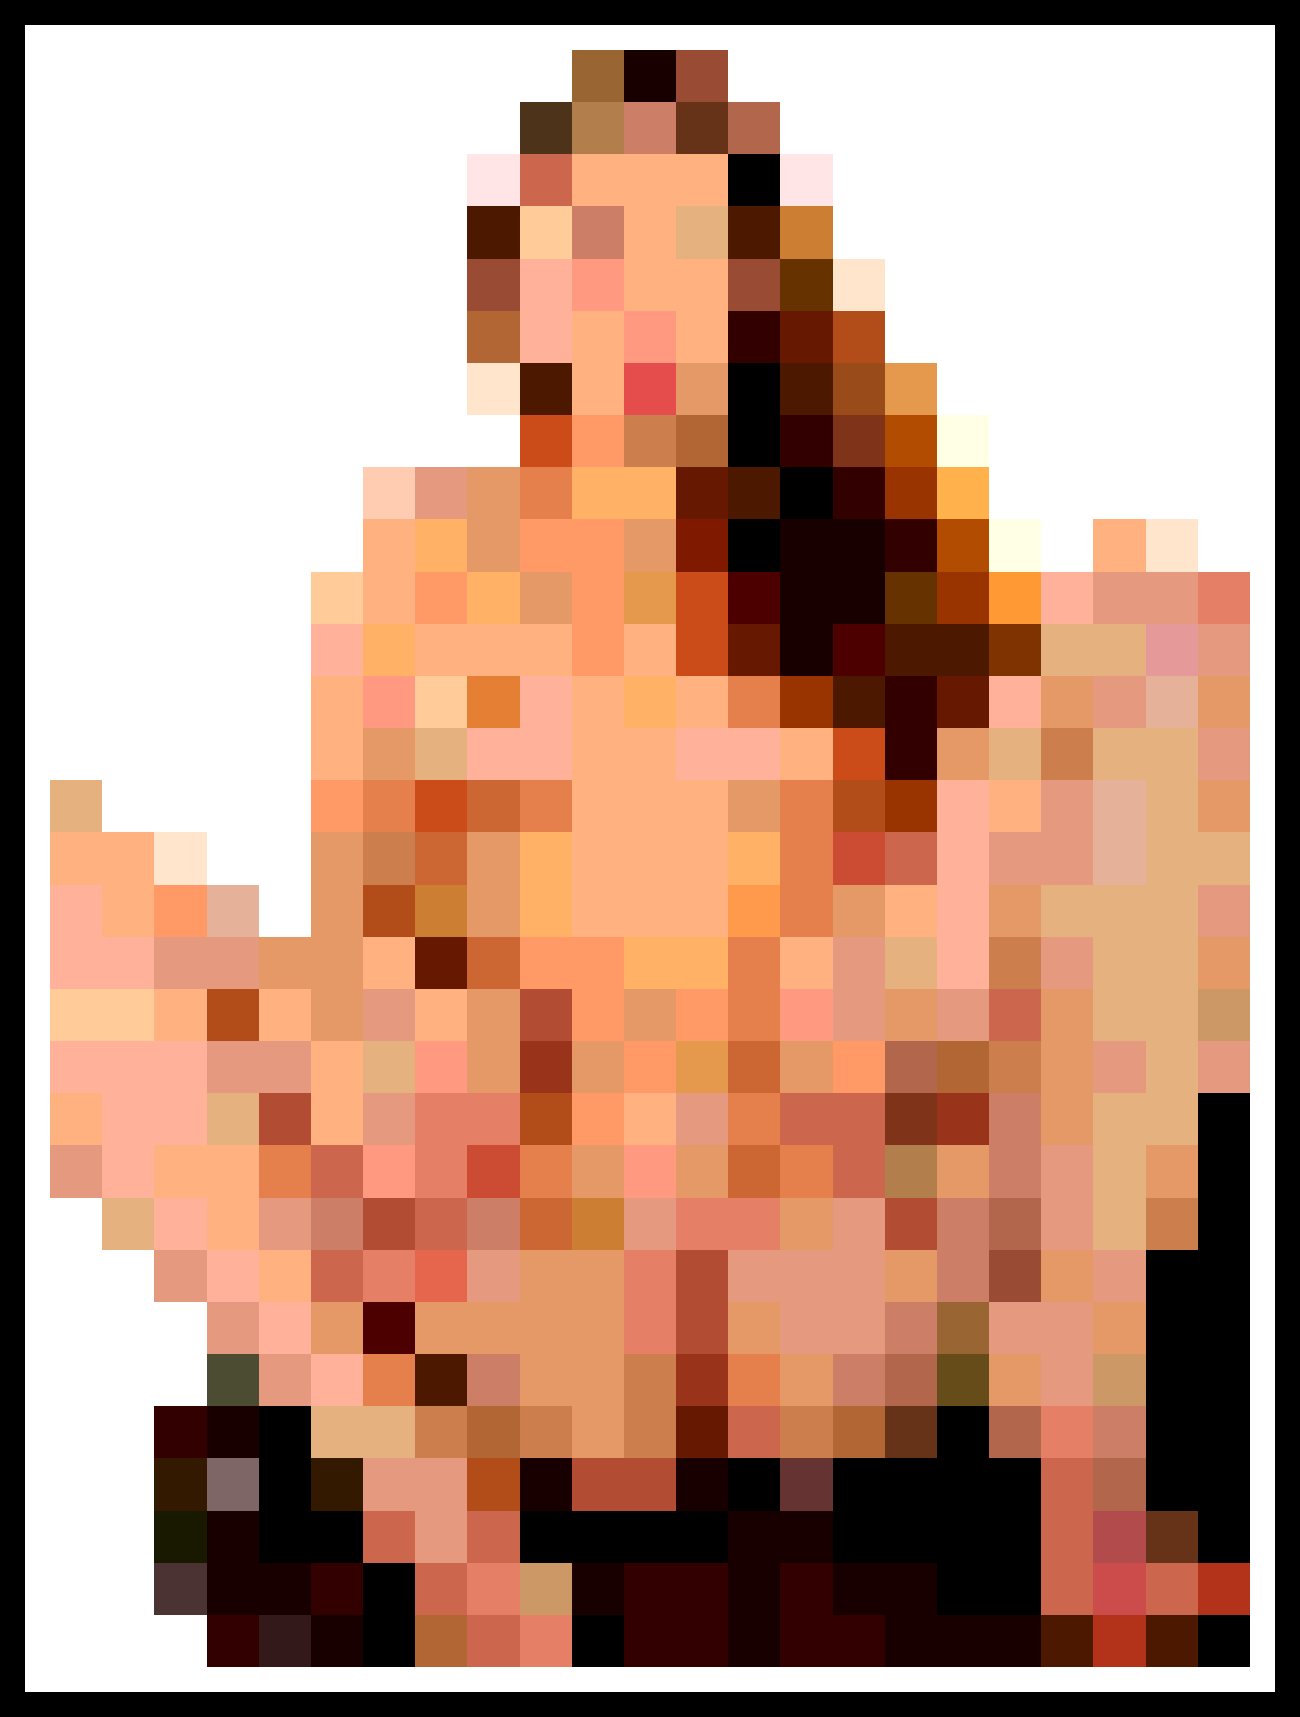 Makese Vale Befa Xxx - Nude Pinup Model Pixel Art 87 - NUDEZ | OpenSea